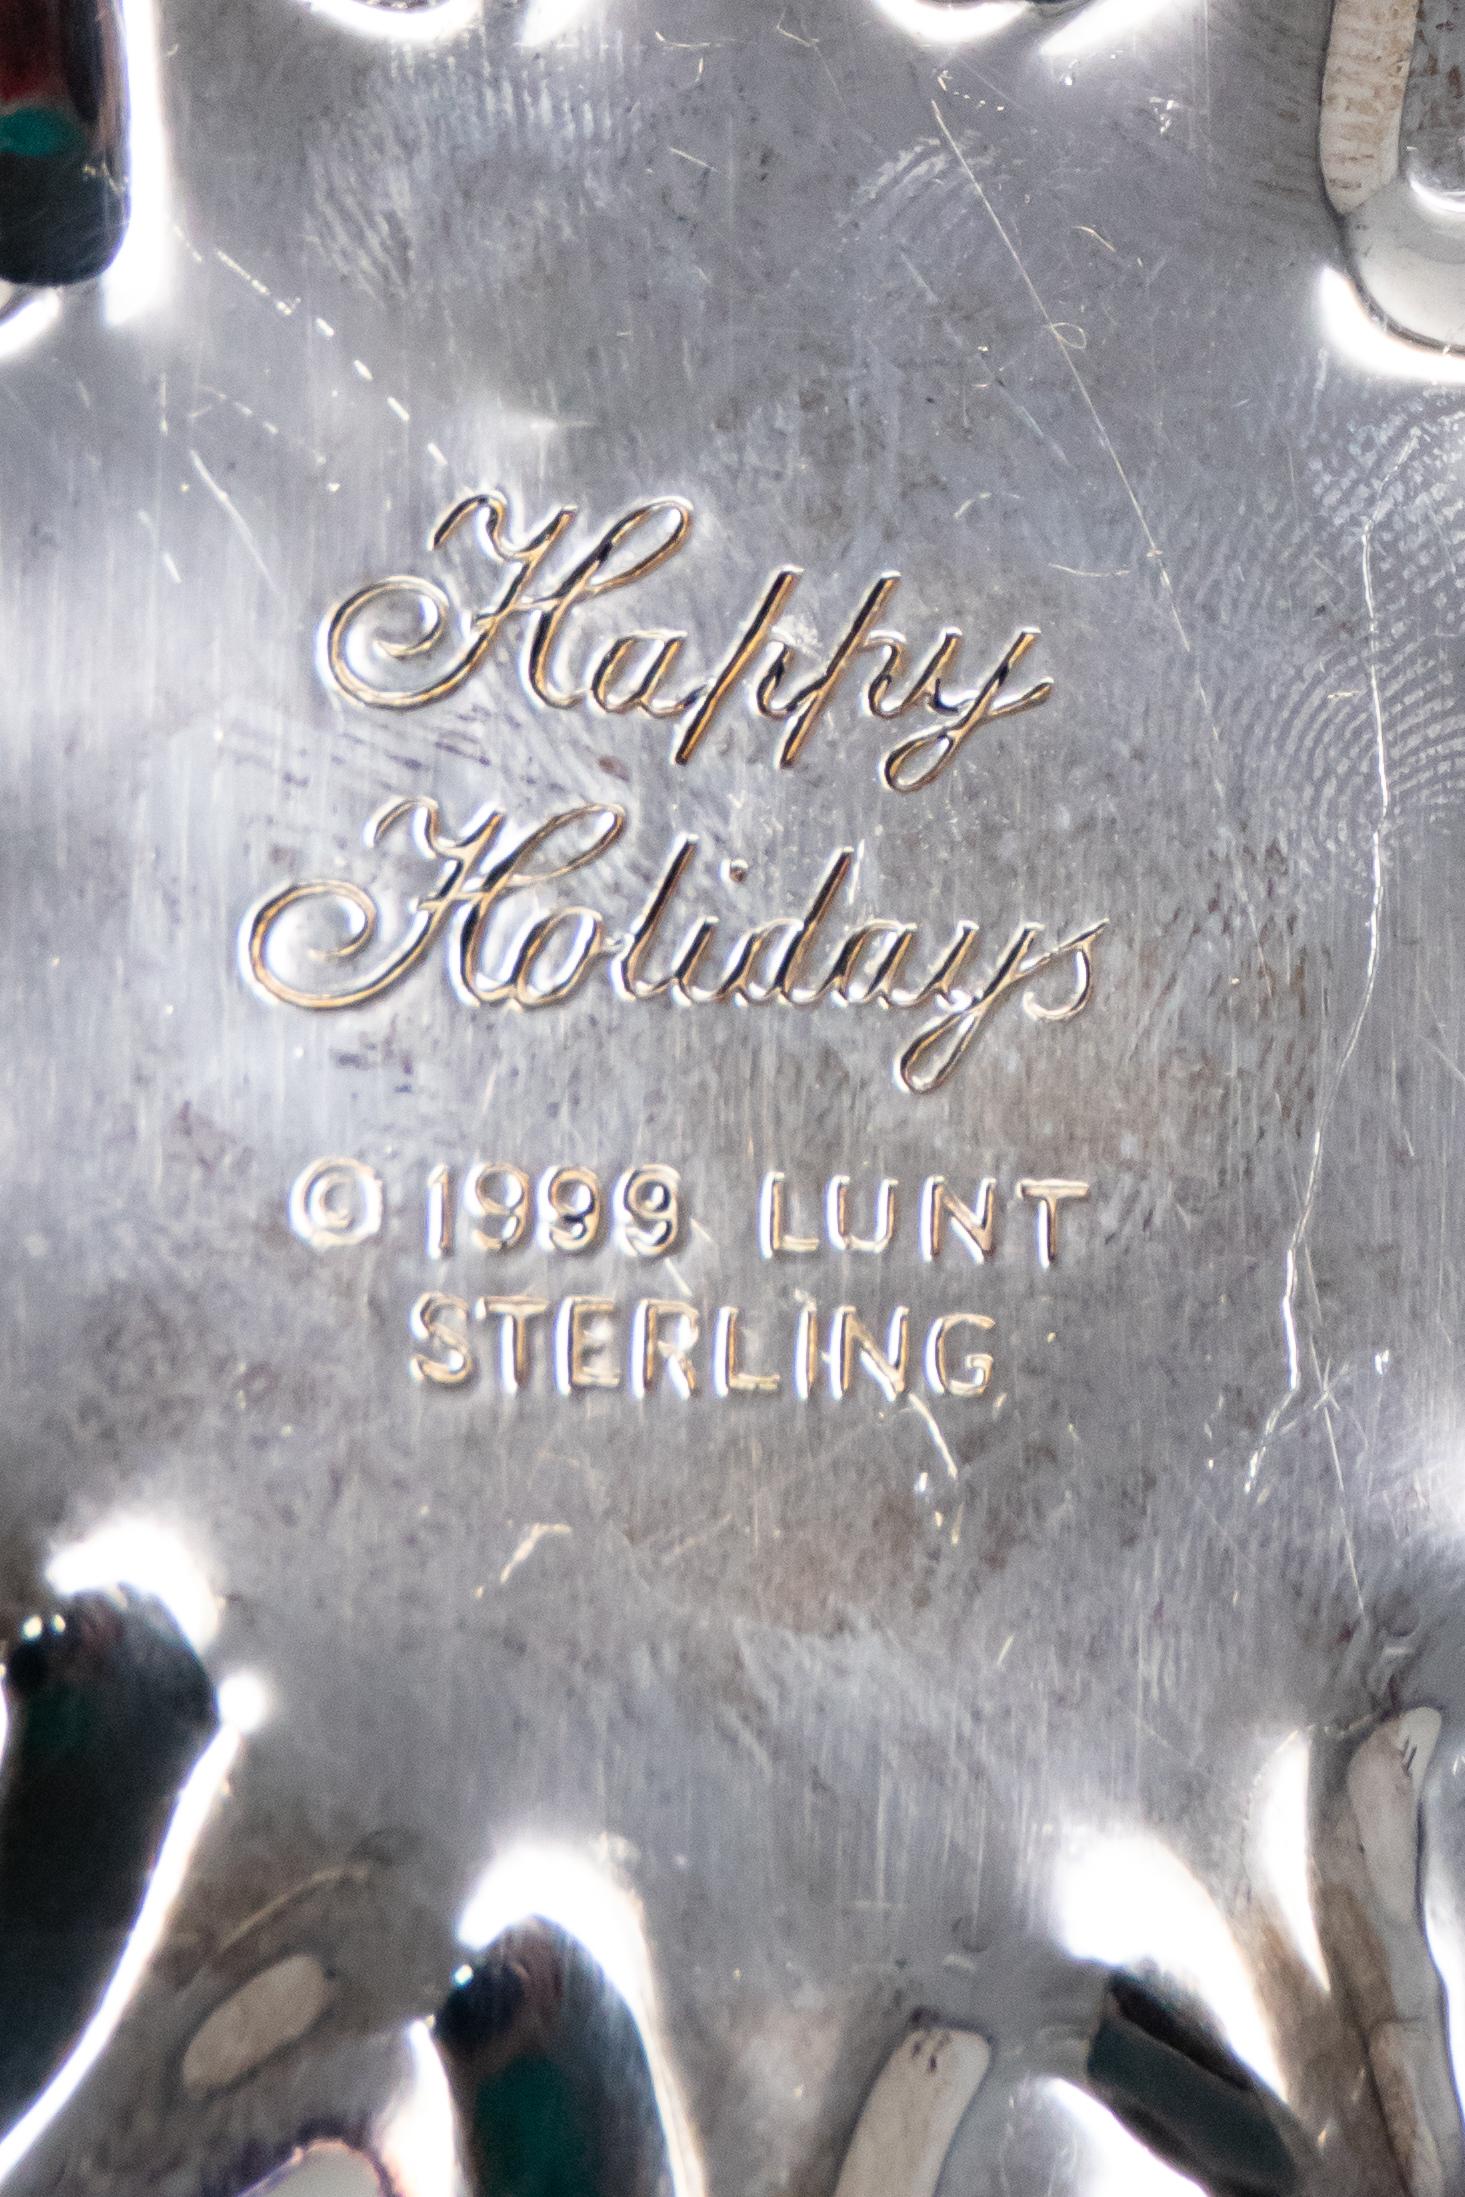 Sterling Silver Lunt Sterling Spiral Star, 1999 For Sale